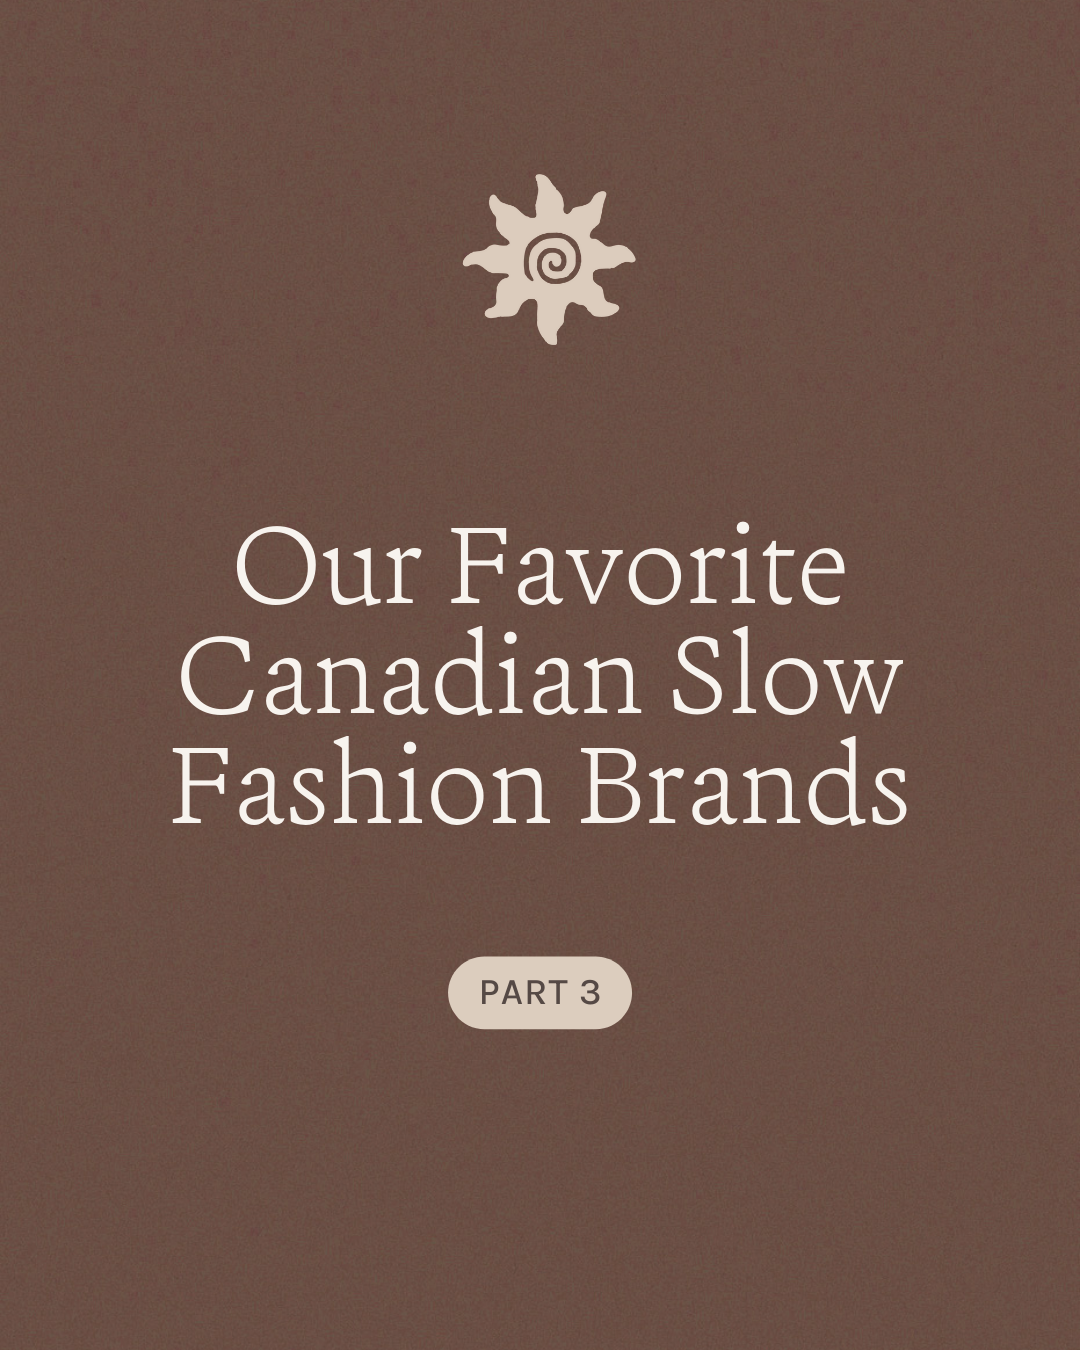 Our Favorite Canadian Slow Fashion Brands pt 3!